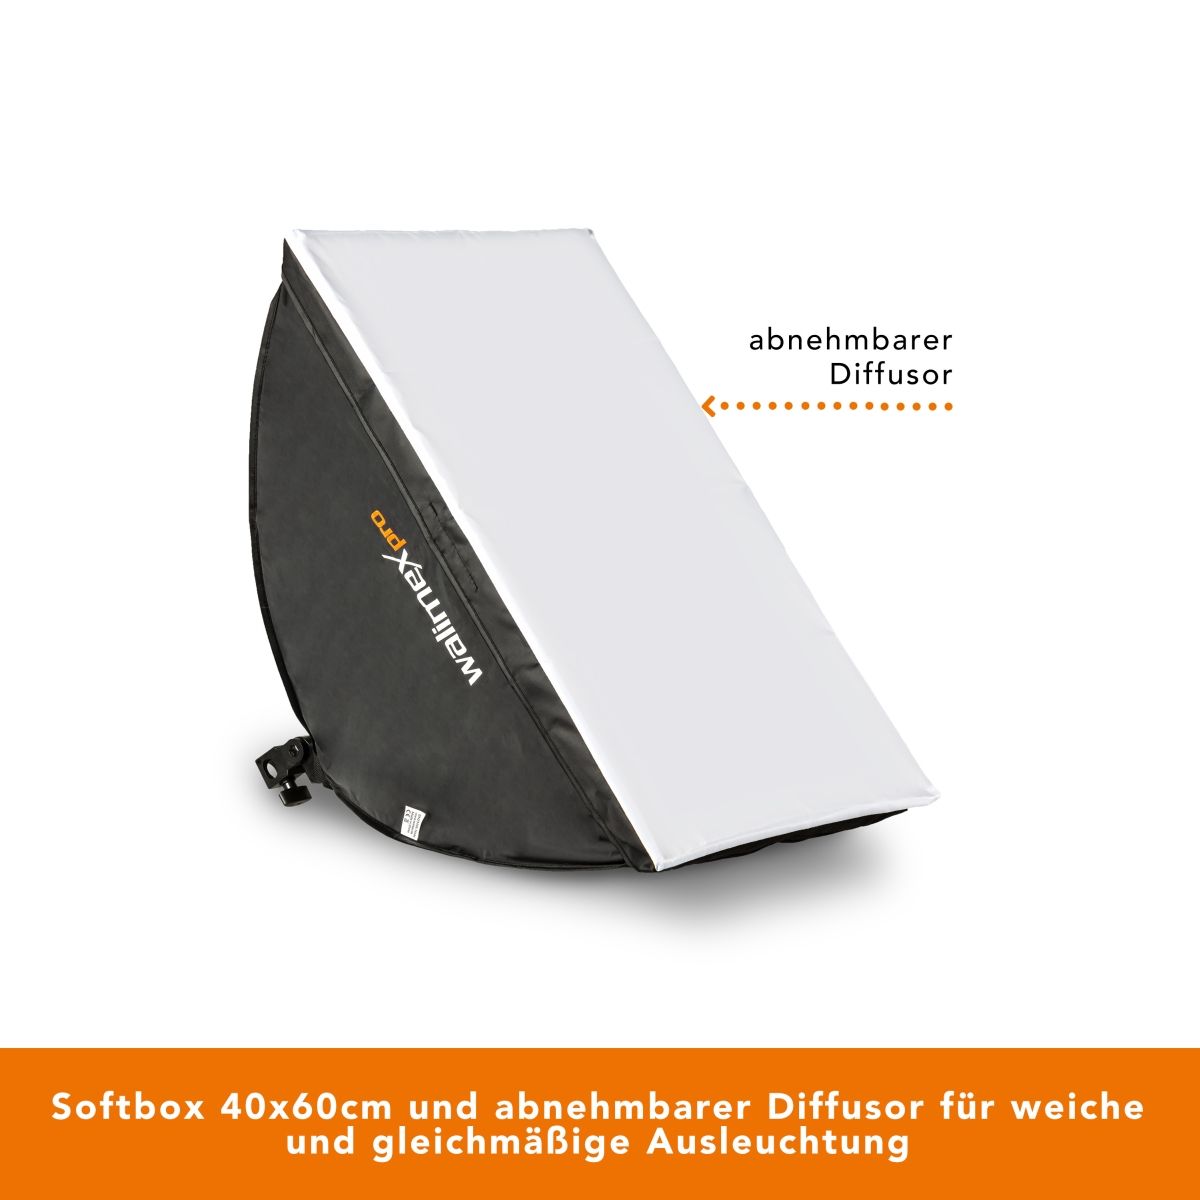 Walimex pro LED 45W Softbox 40 x 60 cm Bi Color